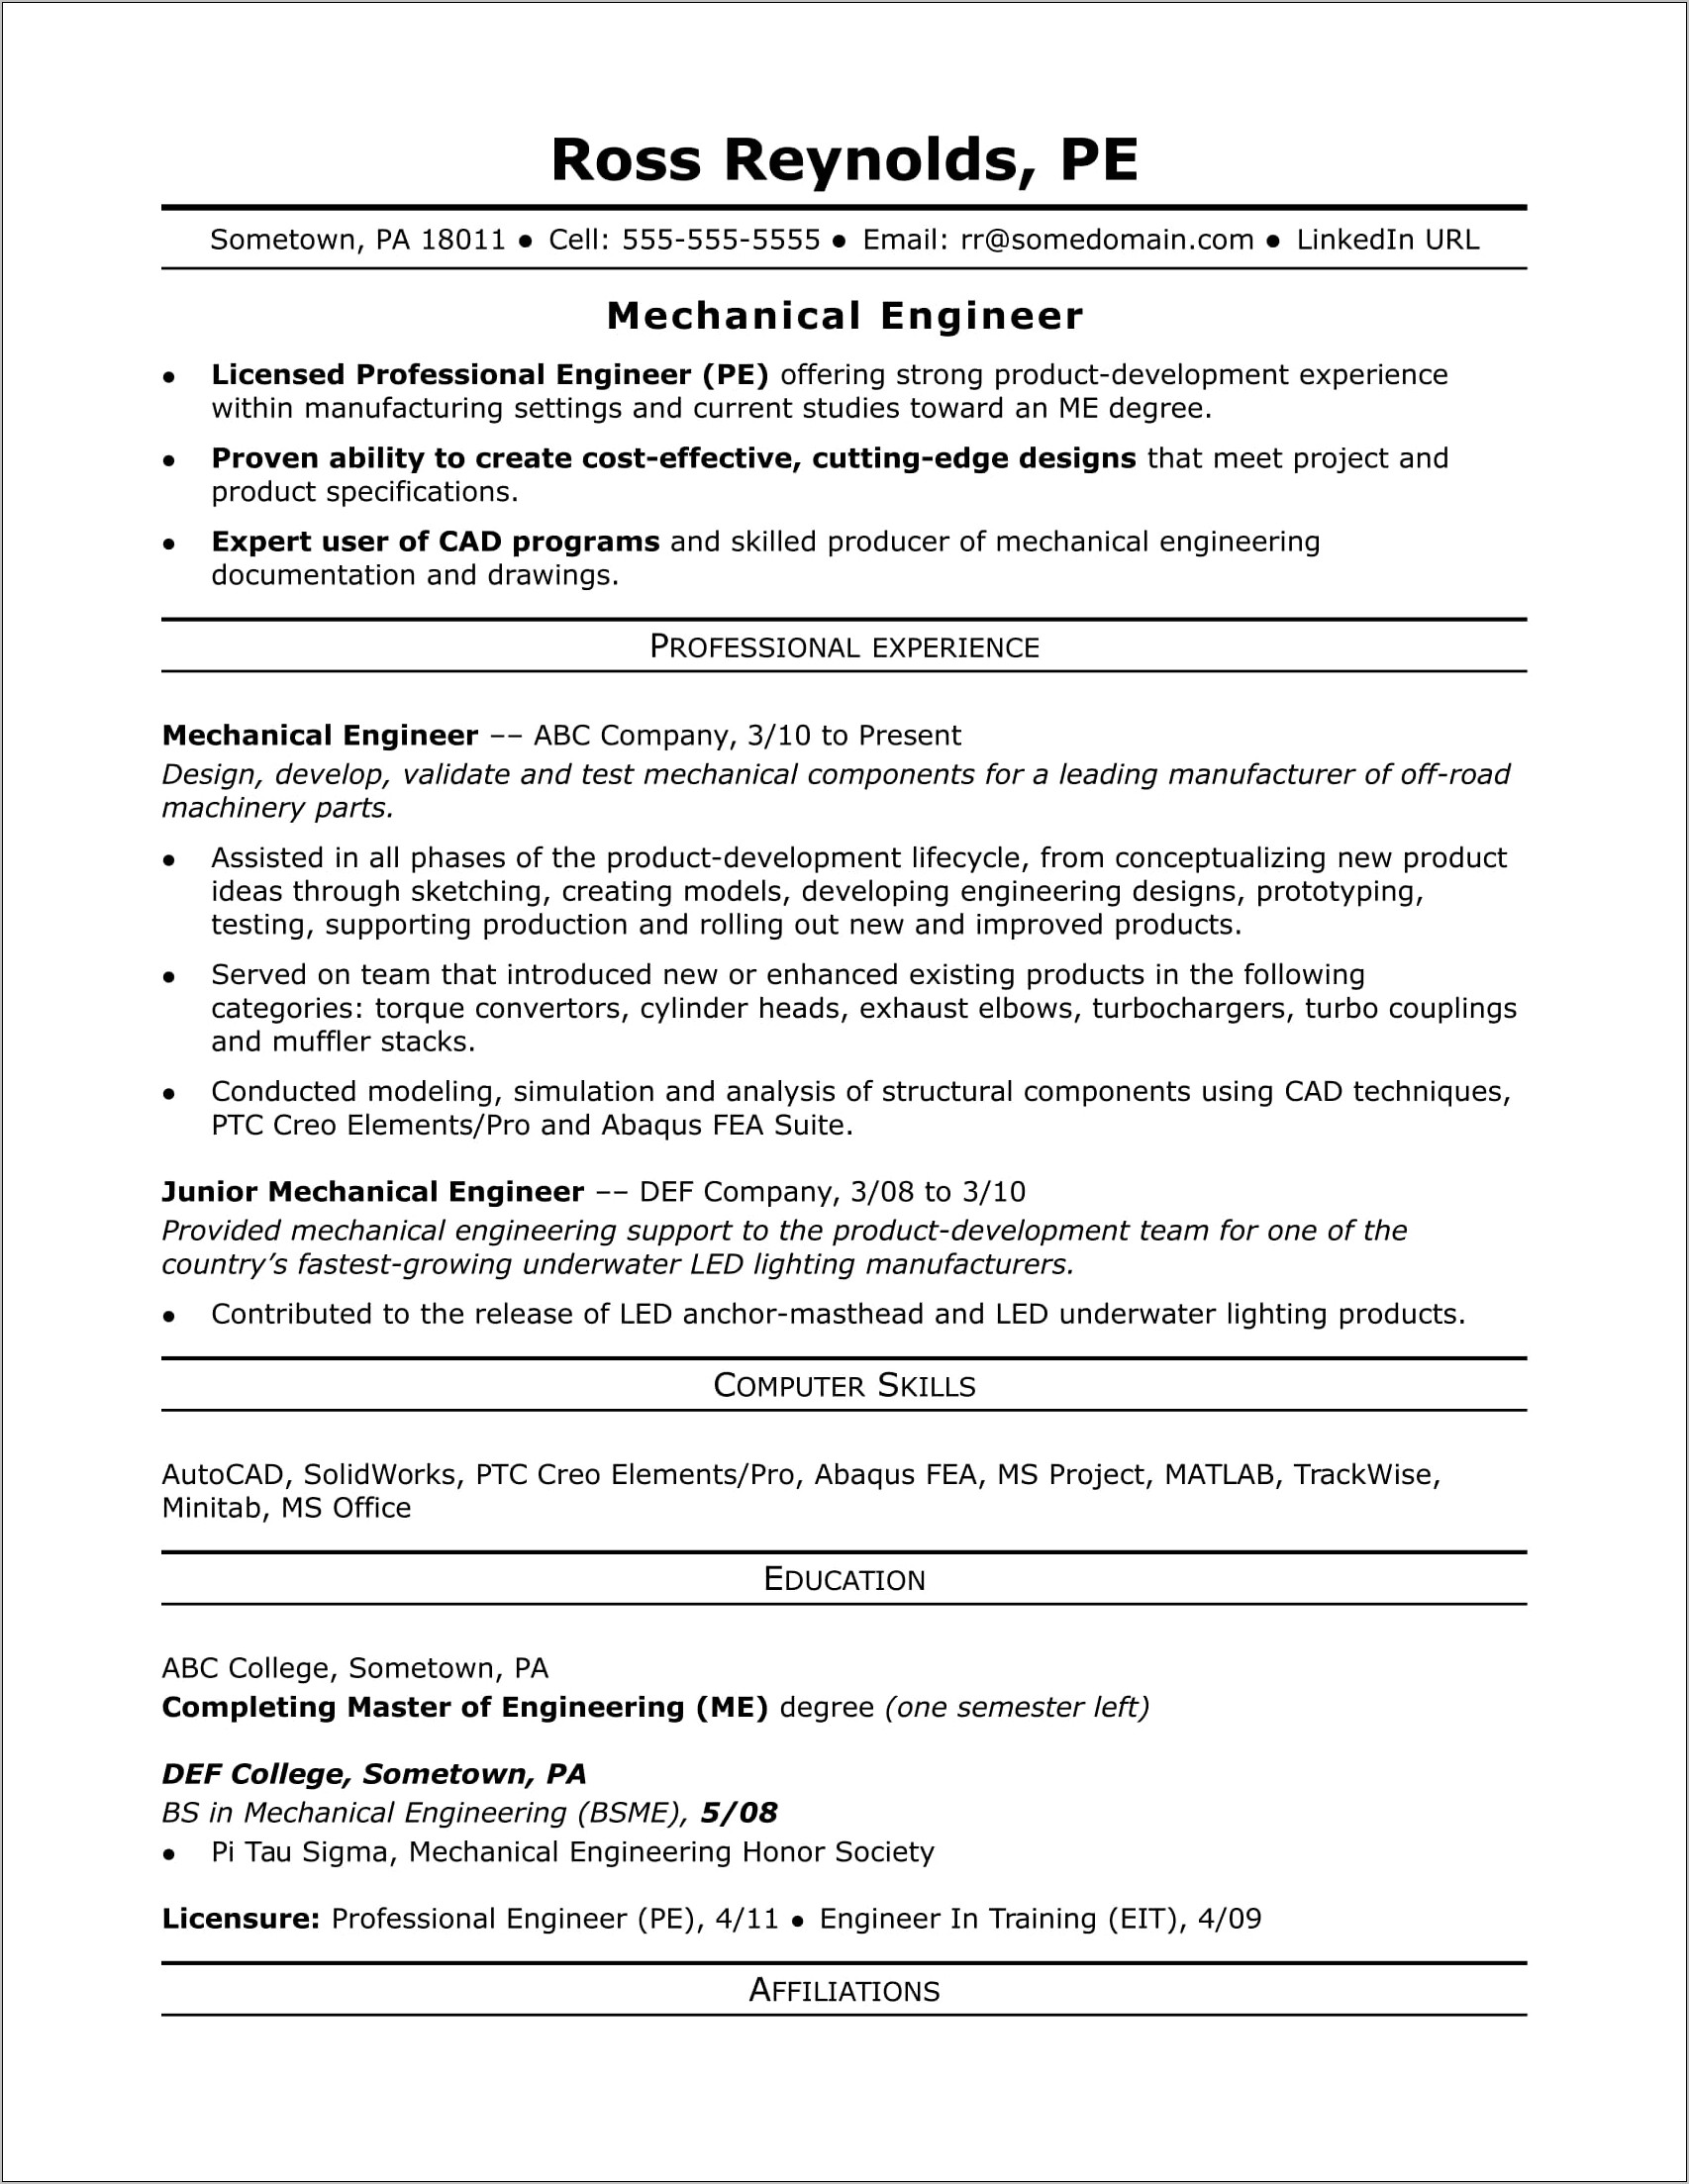 Mechanical Engineer Entry Level Resume Samples